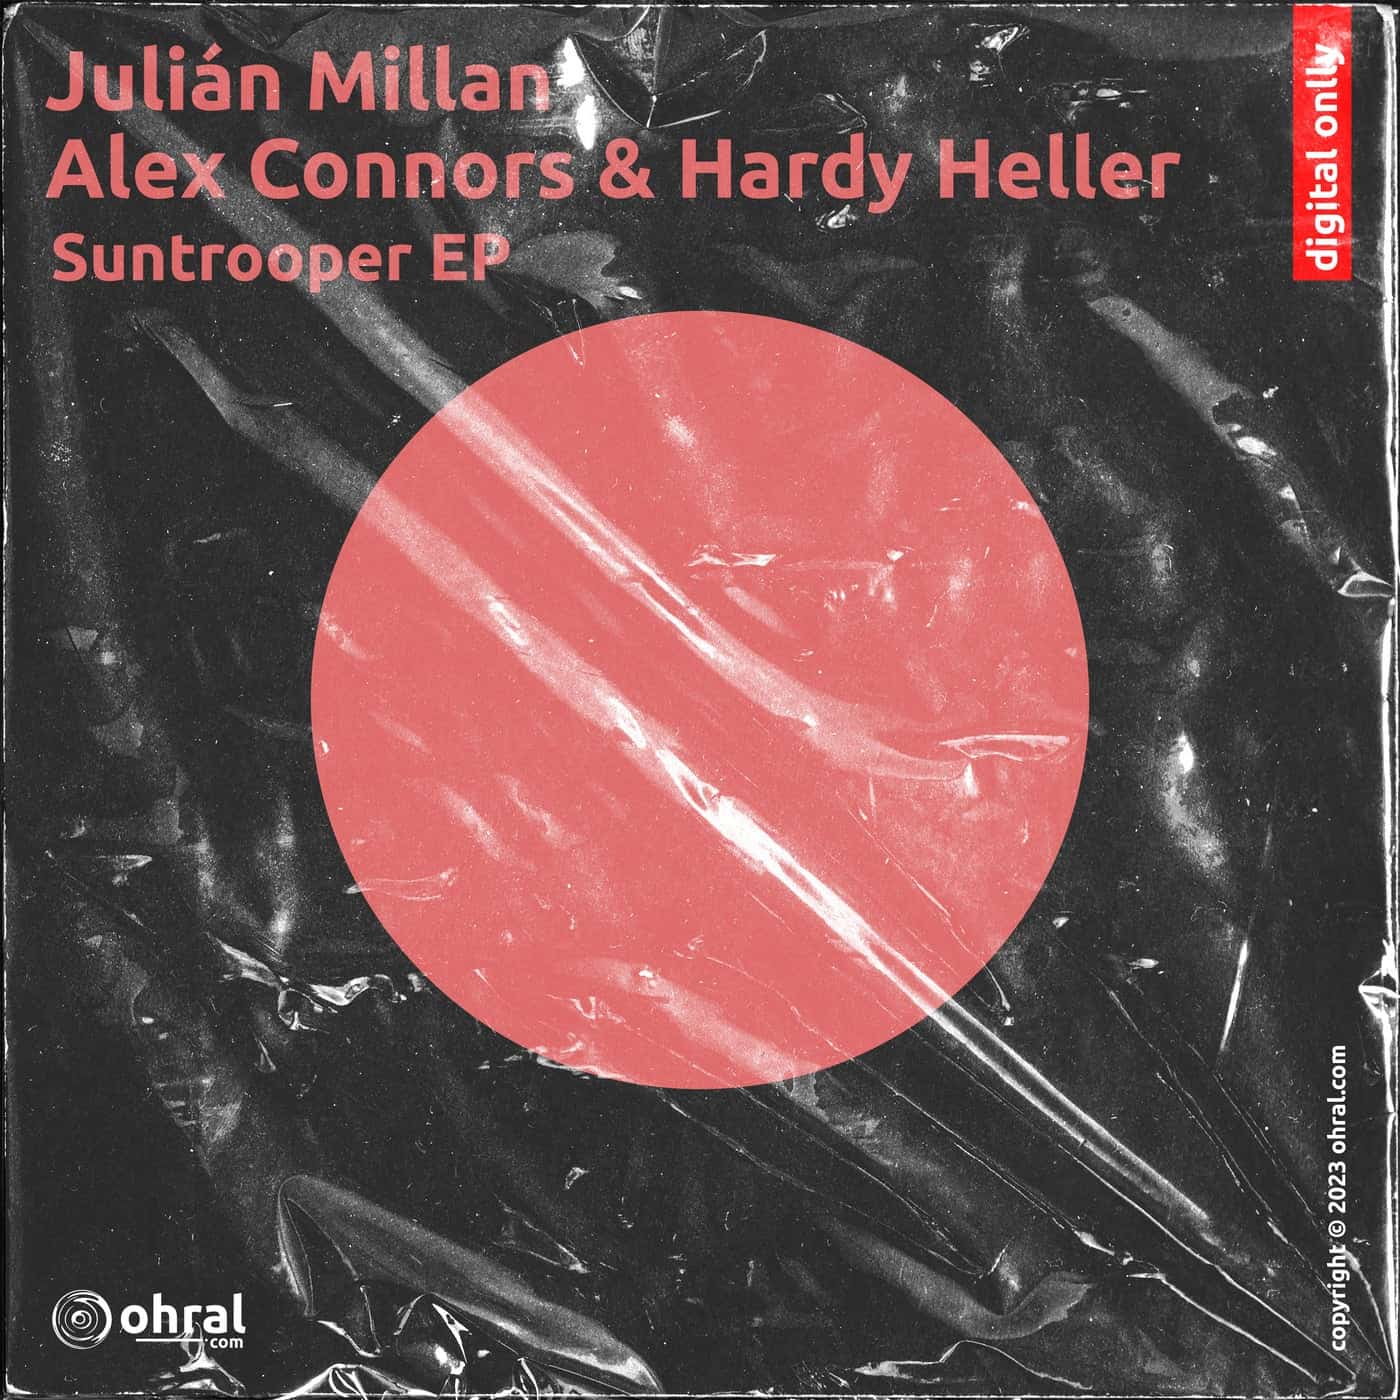 Download Hardy Heller, Alex Connors, Julian Millan - Suntrooper EP on Electrobuzz